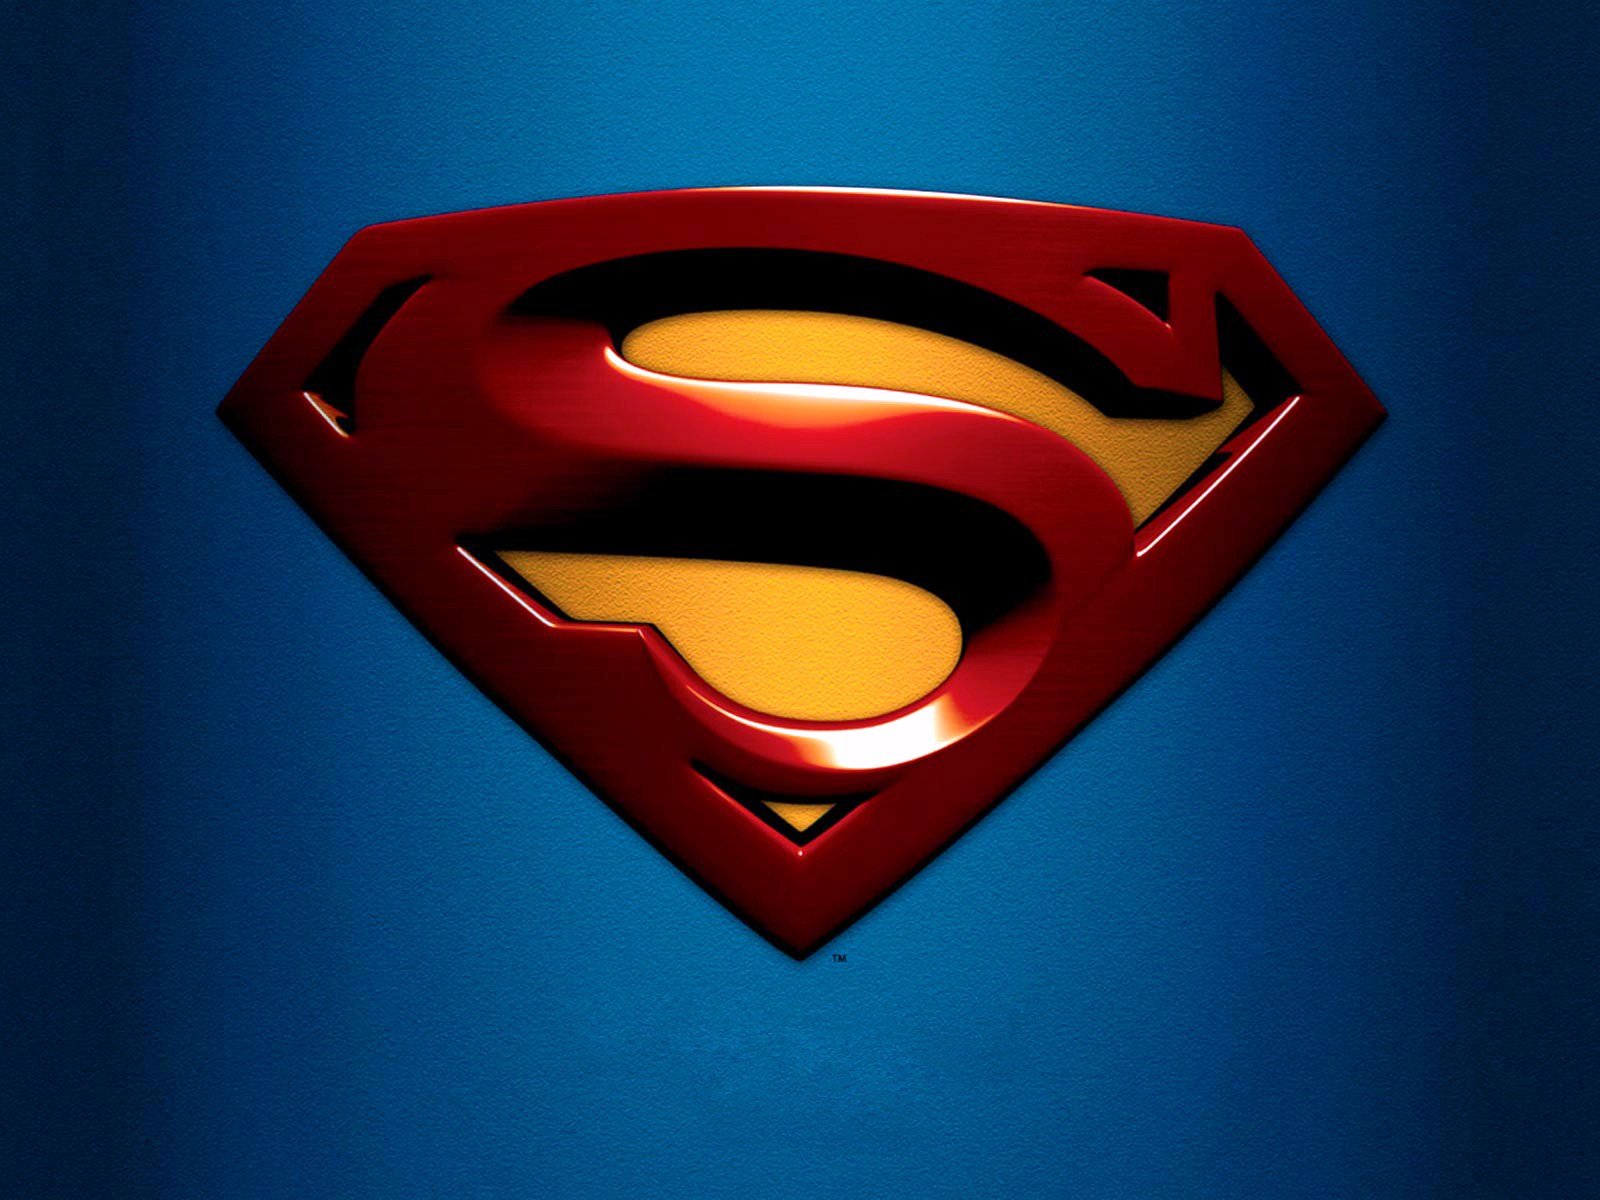 Best Superman Logo wallpaper ID:456564 for High Resolution hd 1600x1200 computer